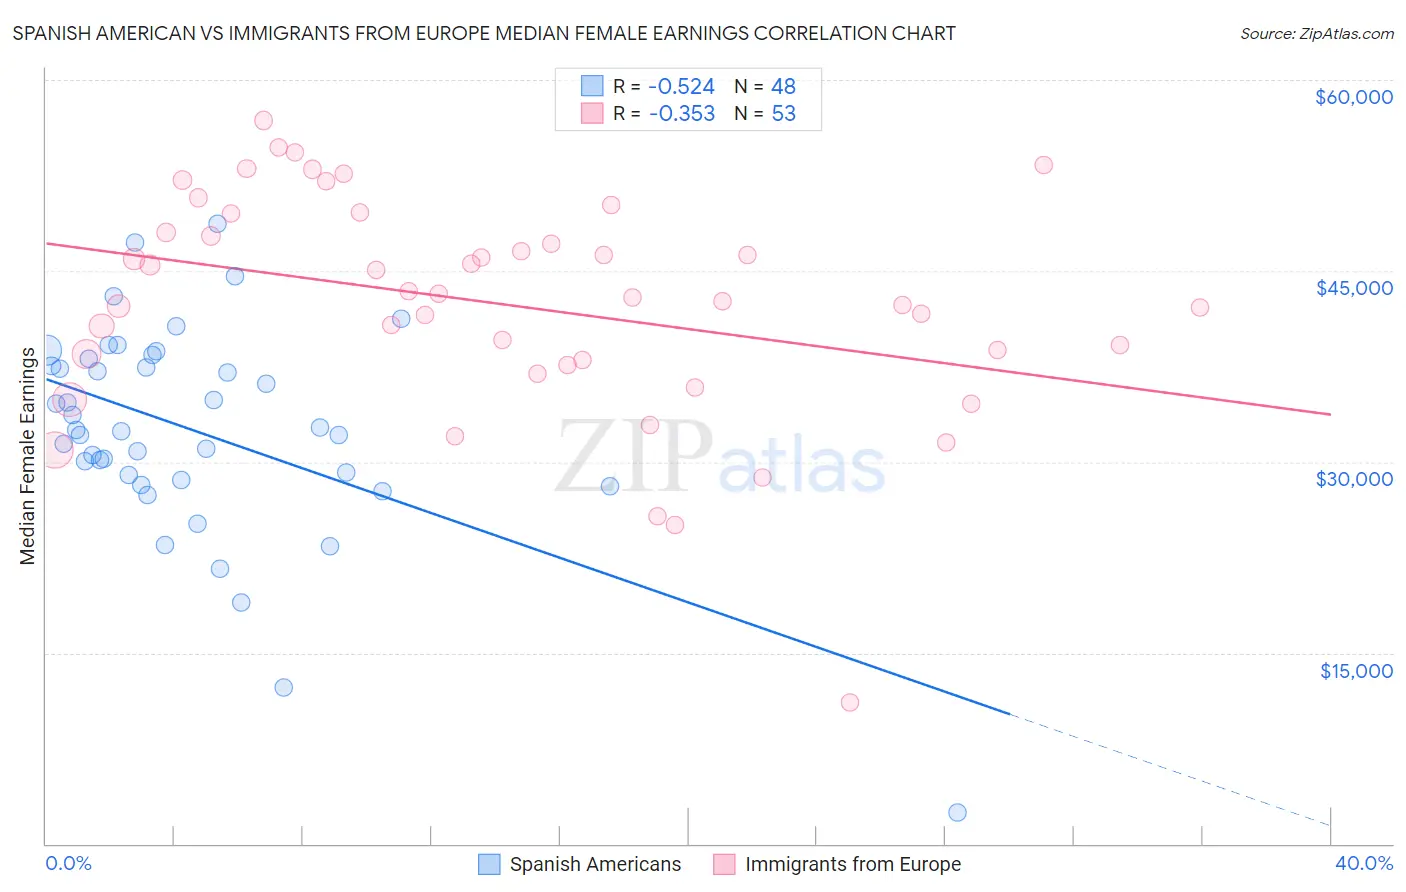 Spanish American vs Immigrants from Europe Median Female Earnings